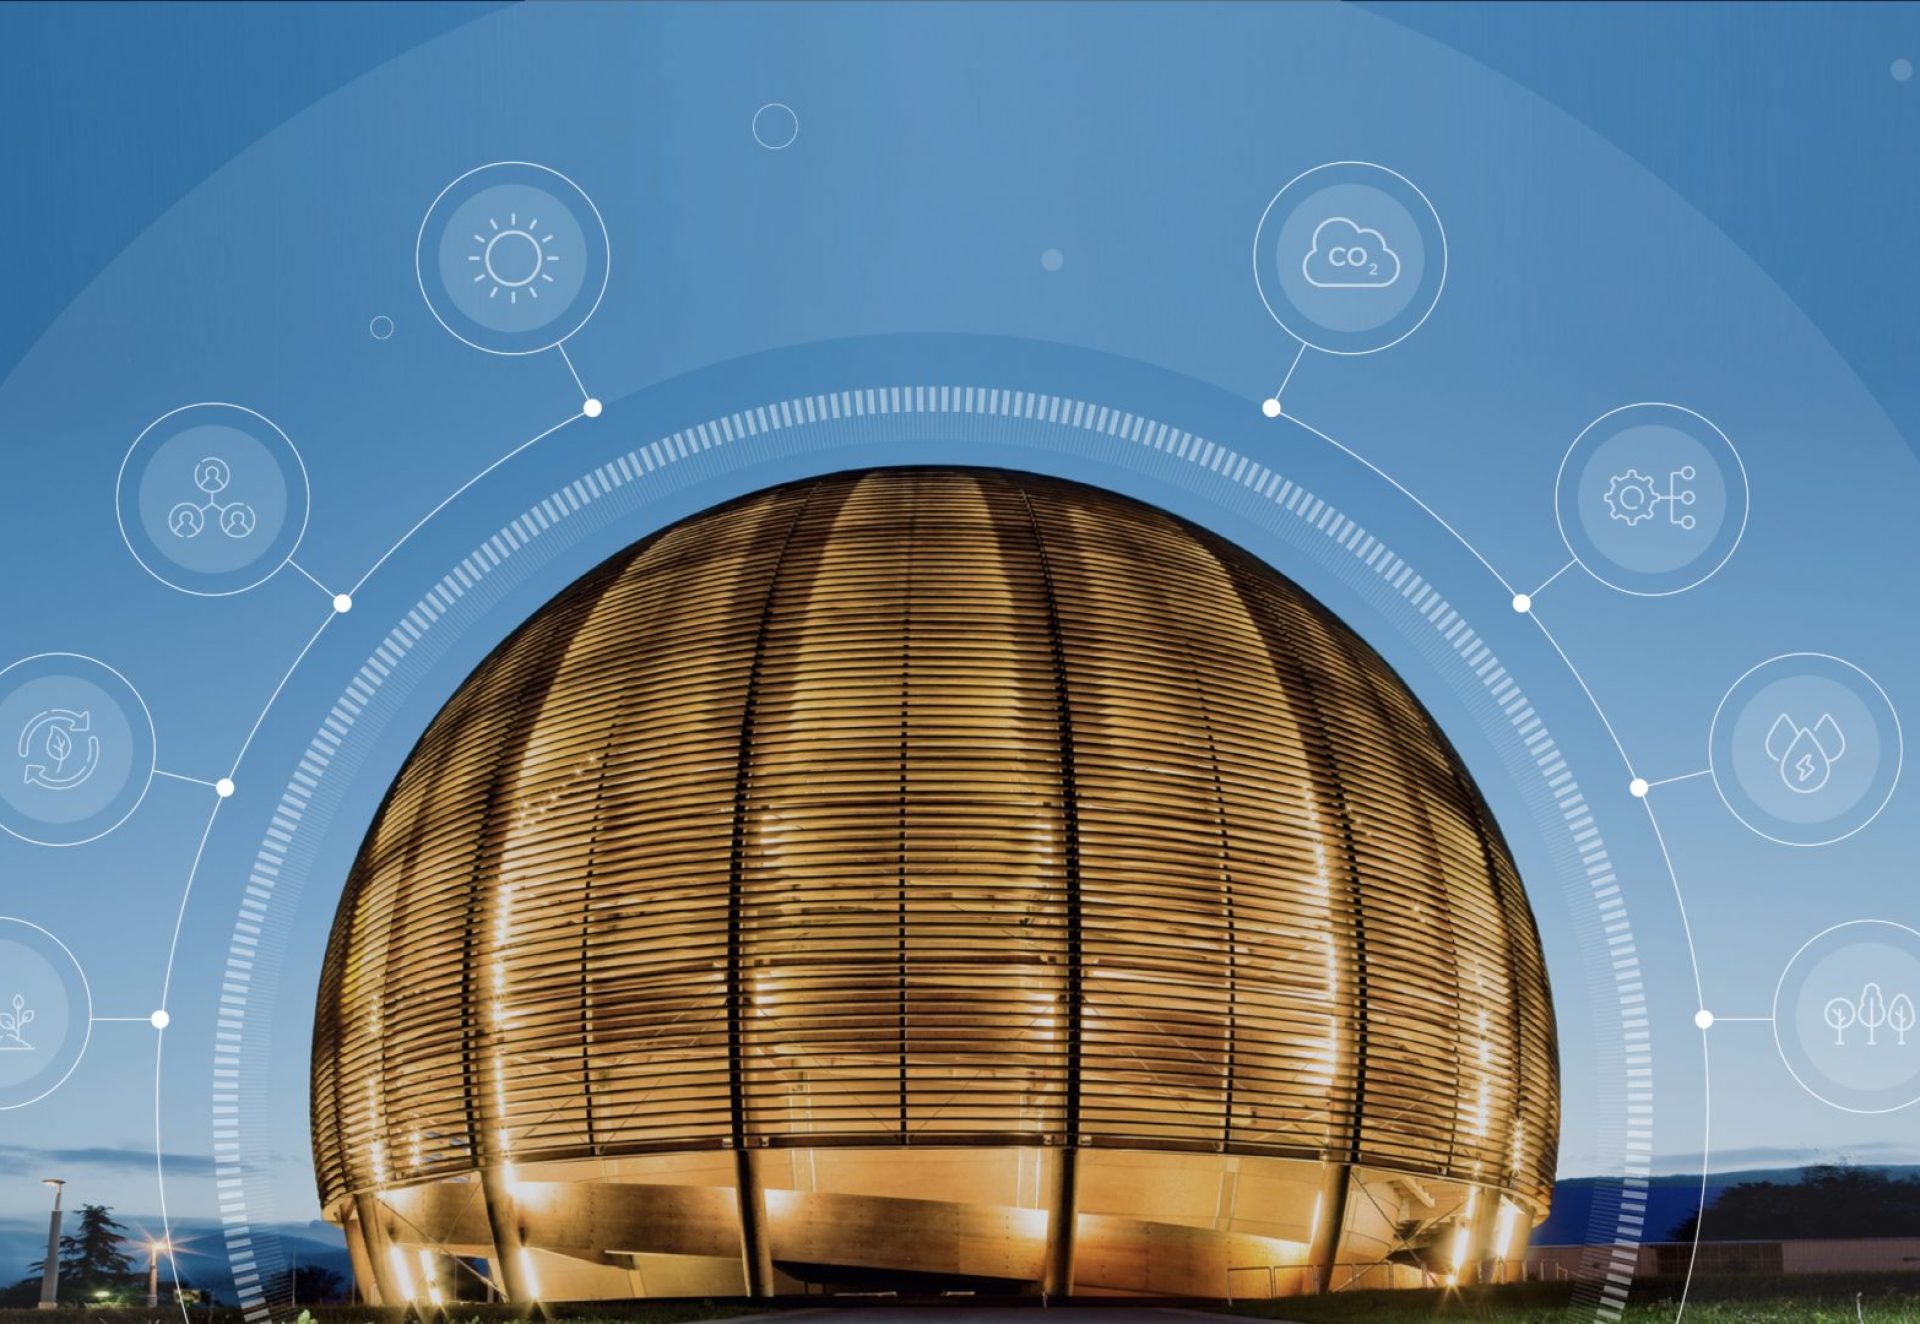 CERN Image